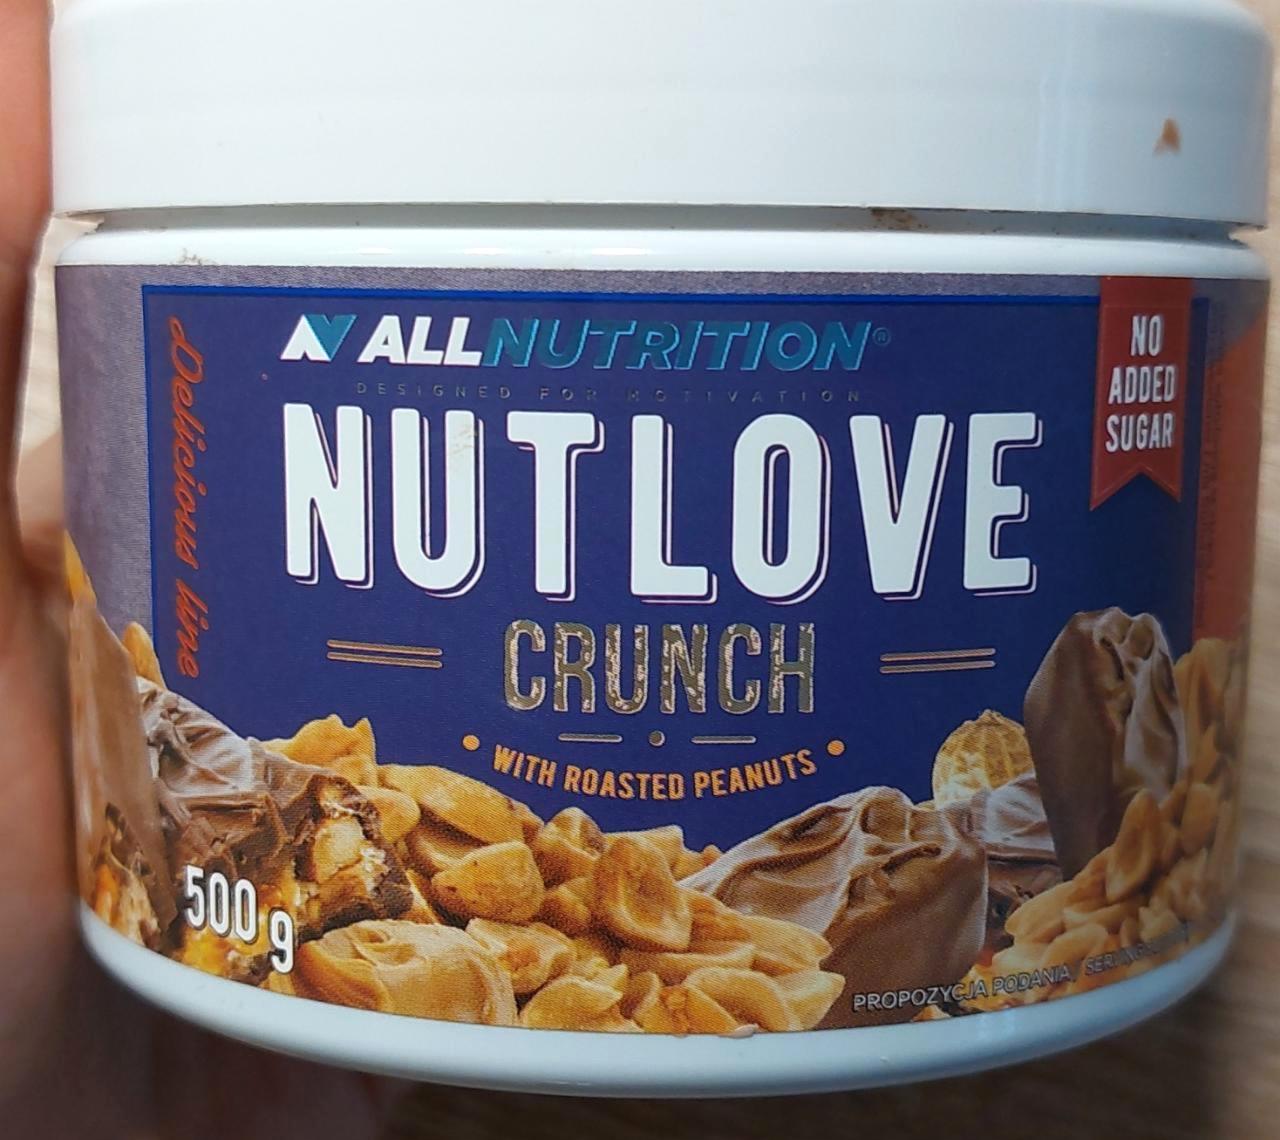 Képek - Nutlove crunch with roasted peanuts All nutrition